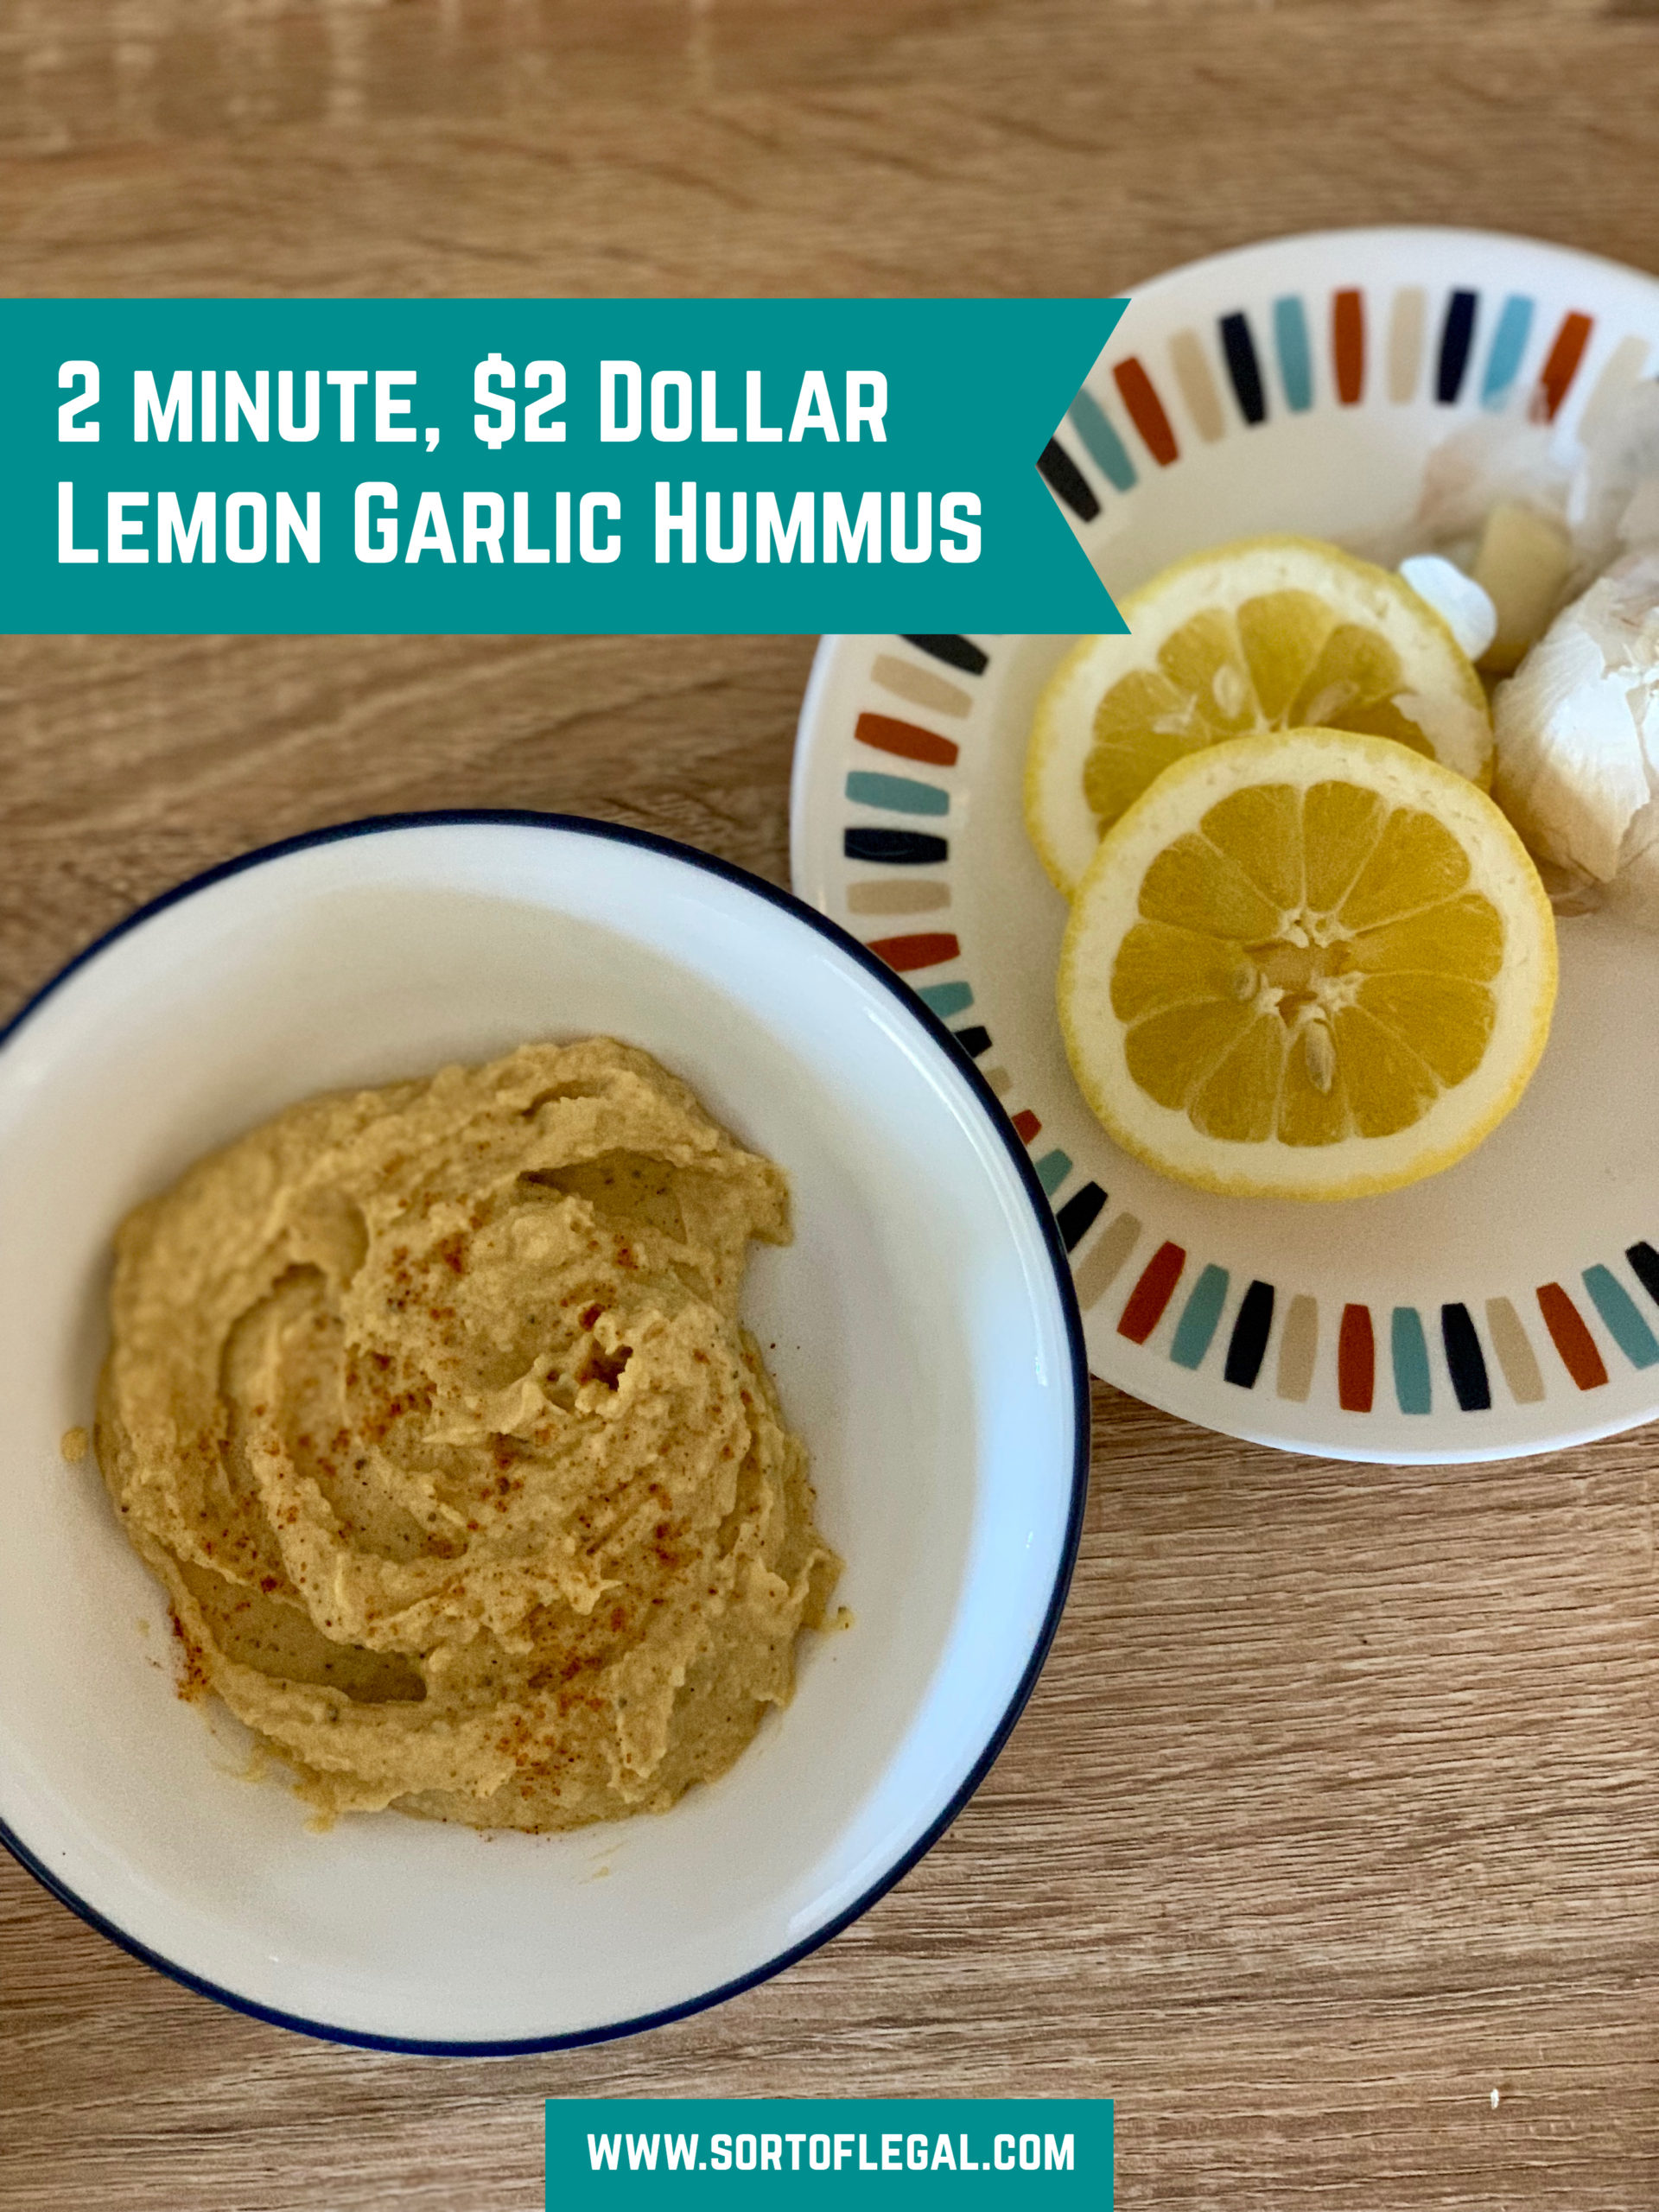 Cooking with no kitche. Studio or van life. Lemon Garlic Hummus Cheap and quick